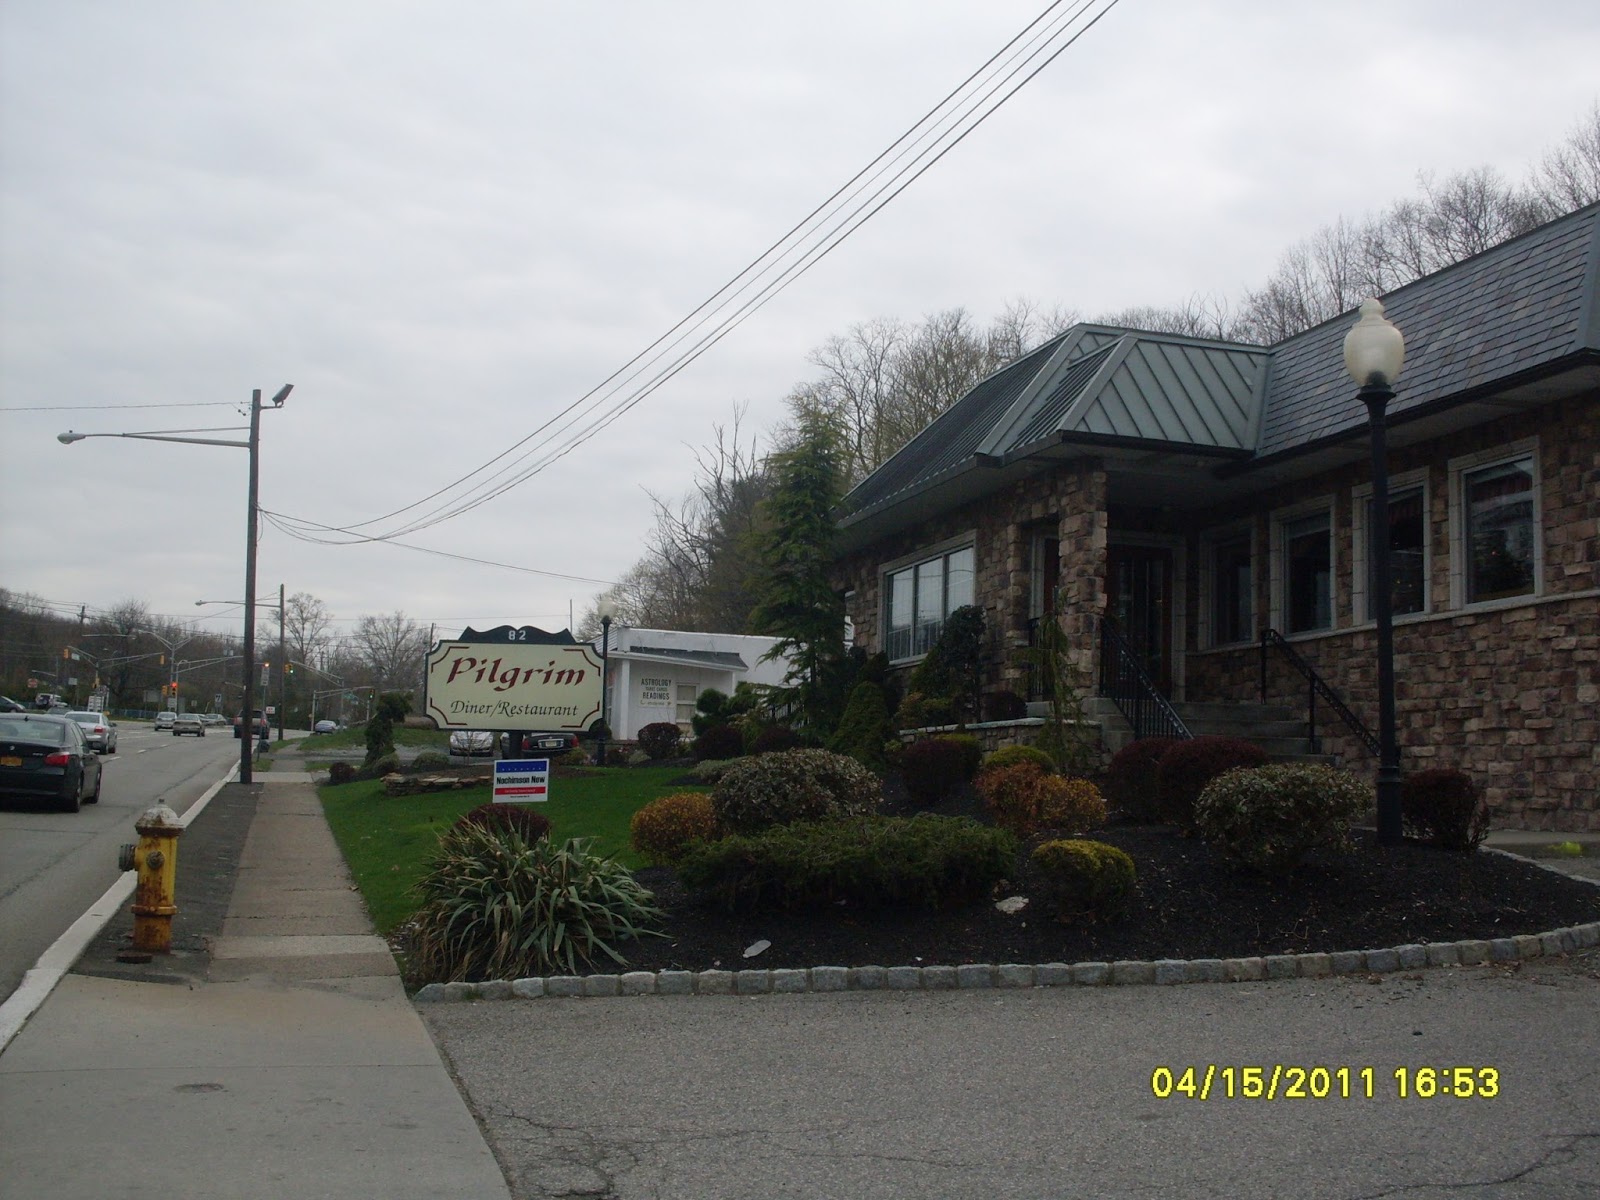 Photo of Pilgrim Diner Restaurant in Cedar Grove City, New Jersey, United States - 2 Picture of Restaurant, Food, Point of interest, Establishment